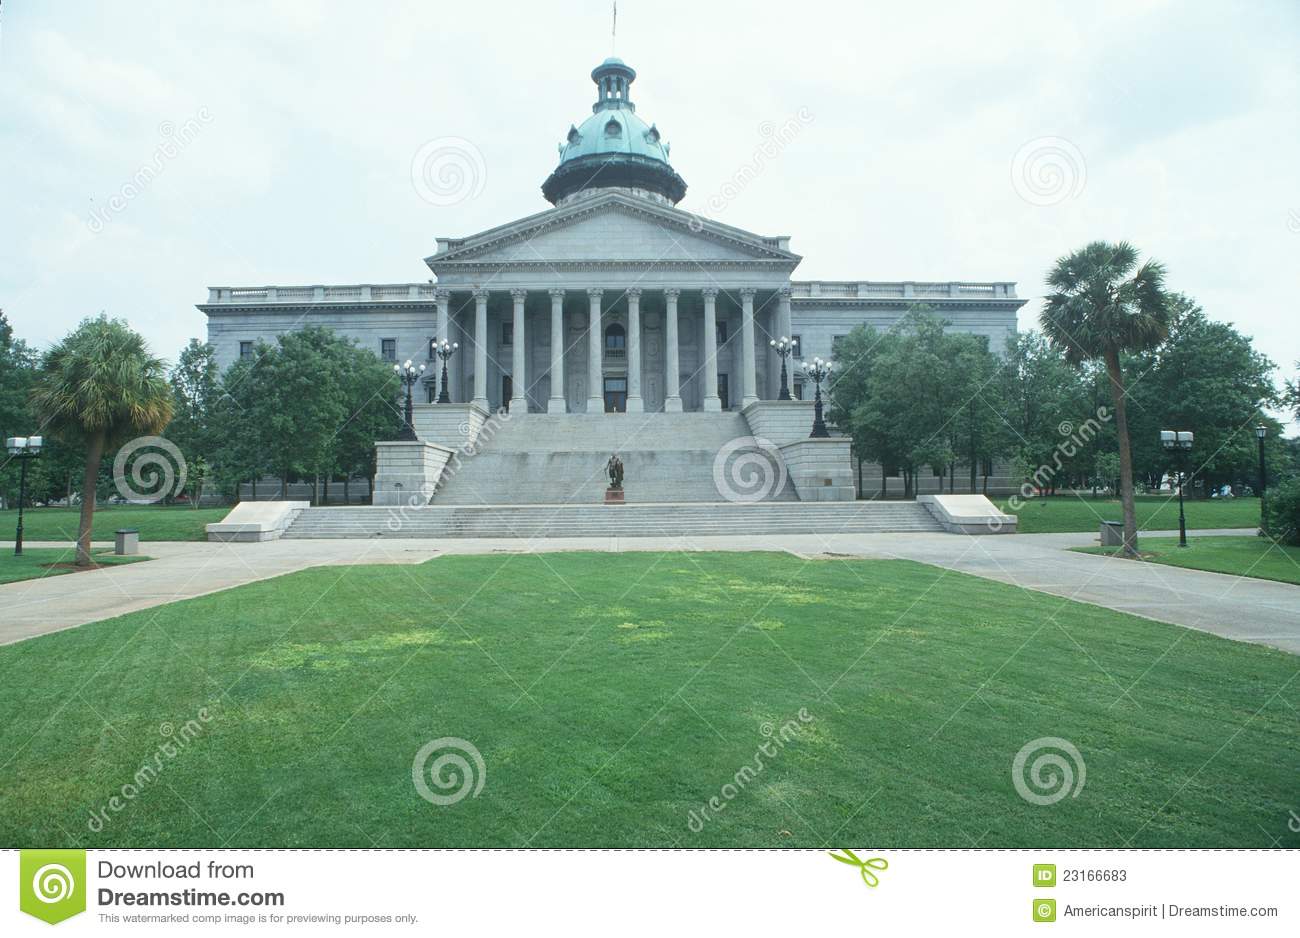 State Capitol Of South Carolina Stock Photos   Image  23166683